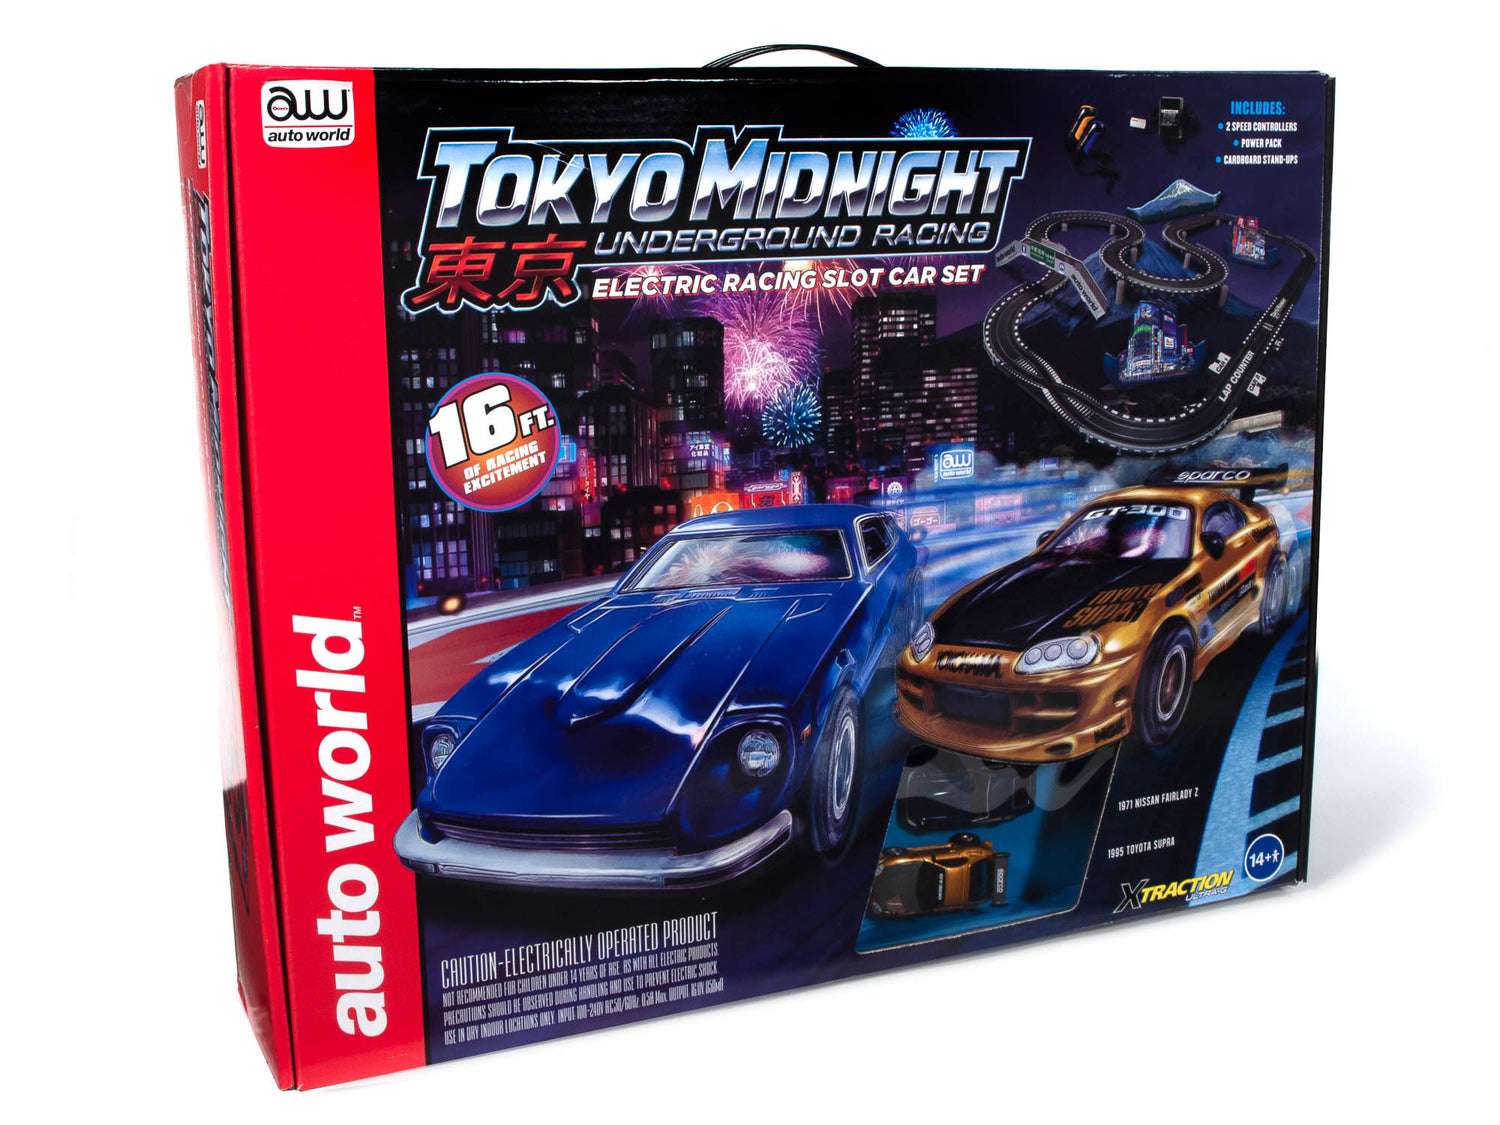 Auto World 16' Tokyo Midnight Underground Racing Slot Race Set